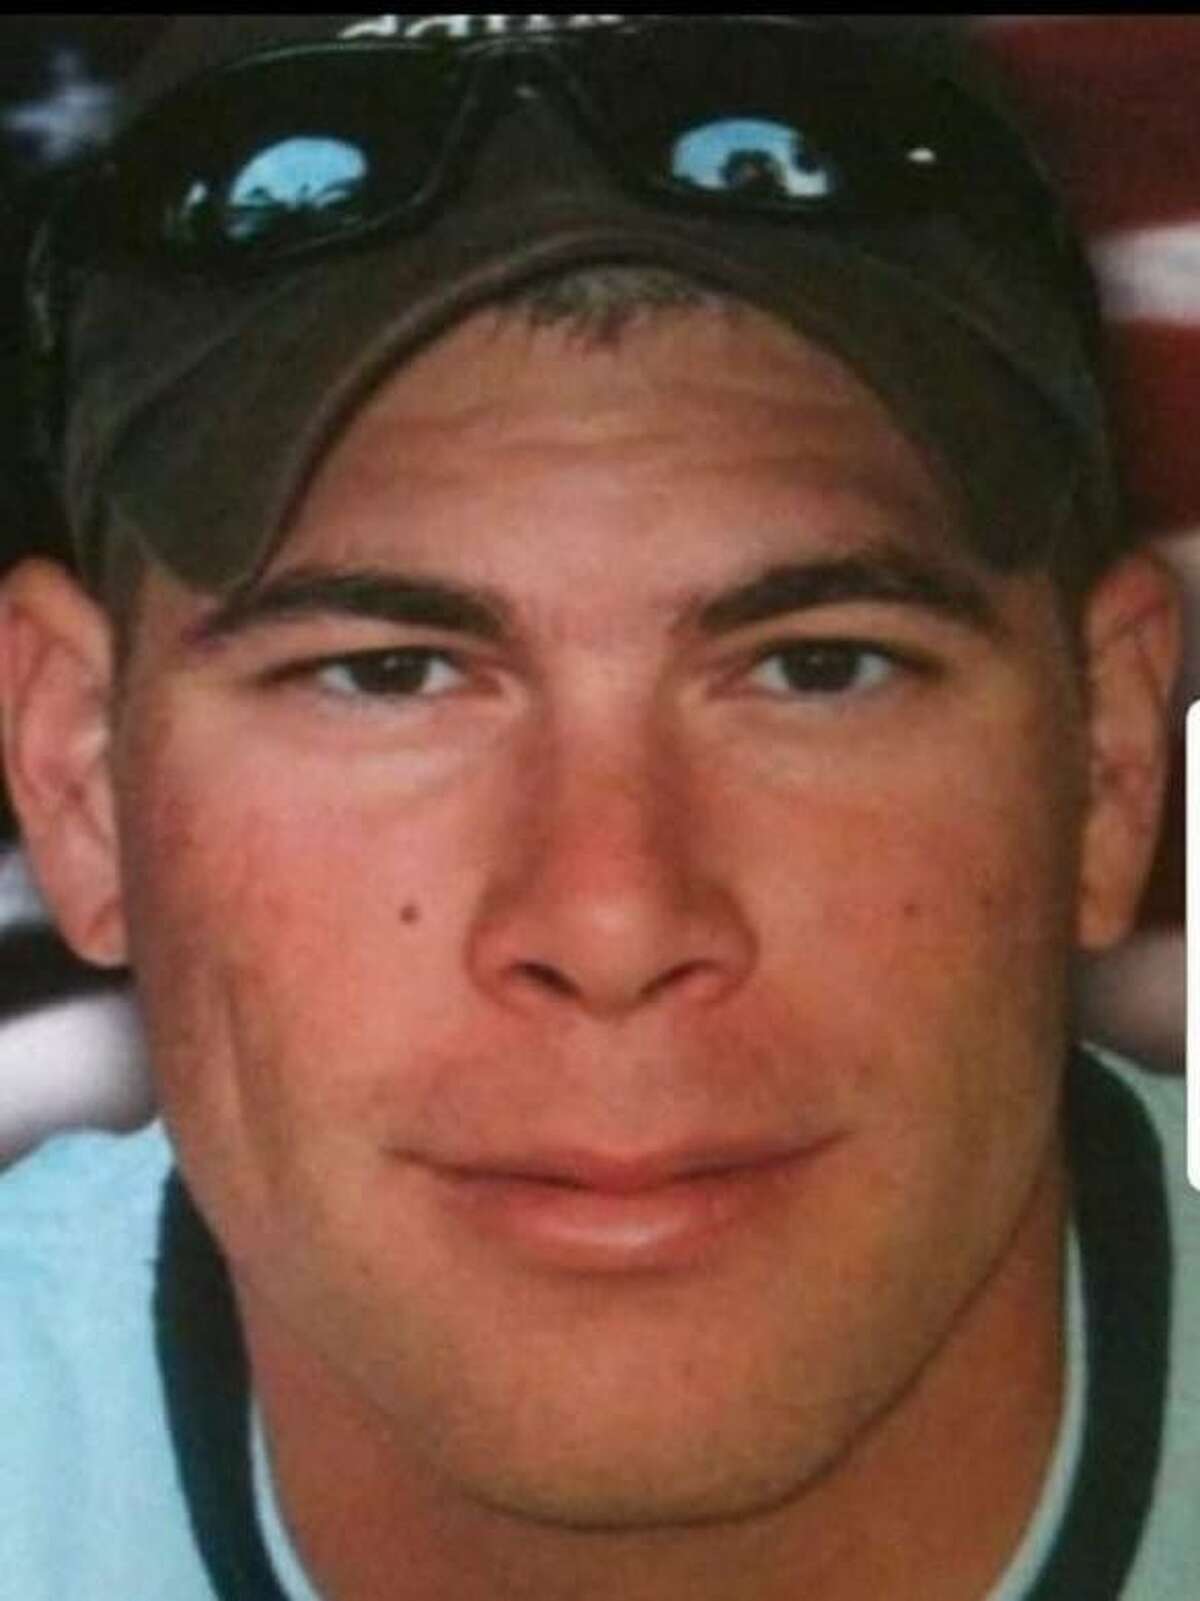 Army Staff Sgt. Christopher R. Morningstar, 27, a San Antonio native, was killed in action in Al Husayniyah, Iraq on Feb. 5, 2006.